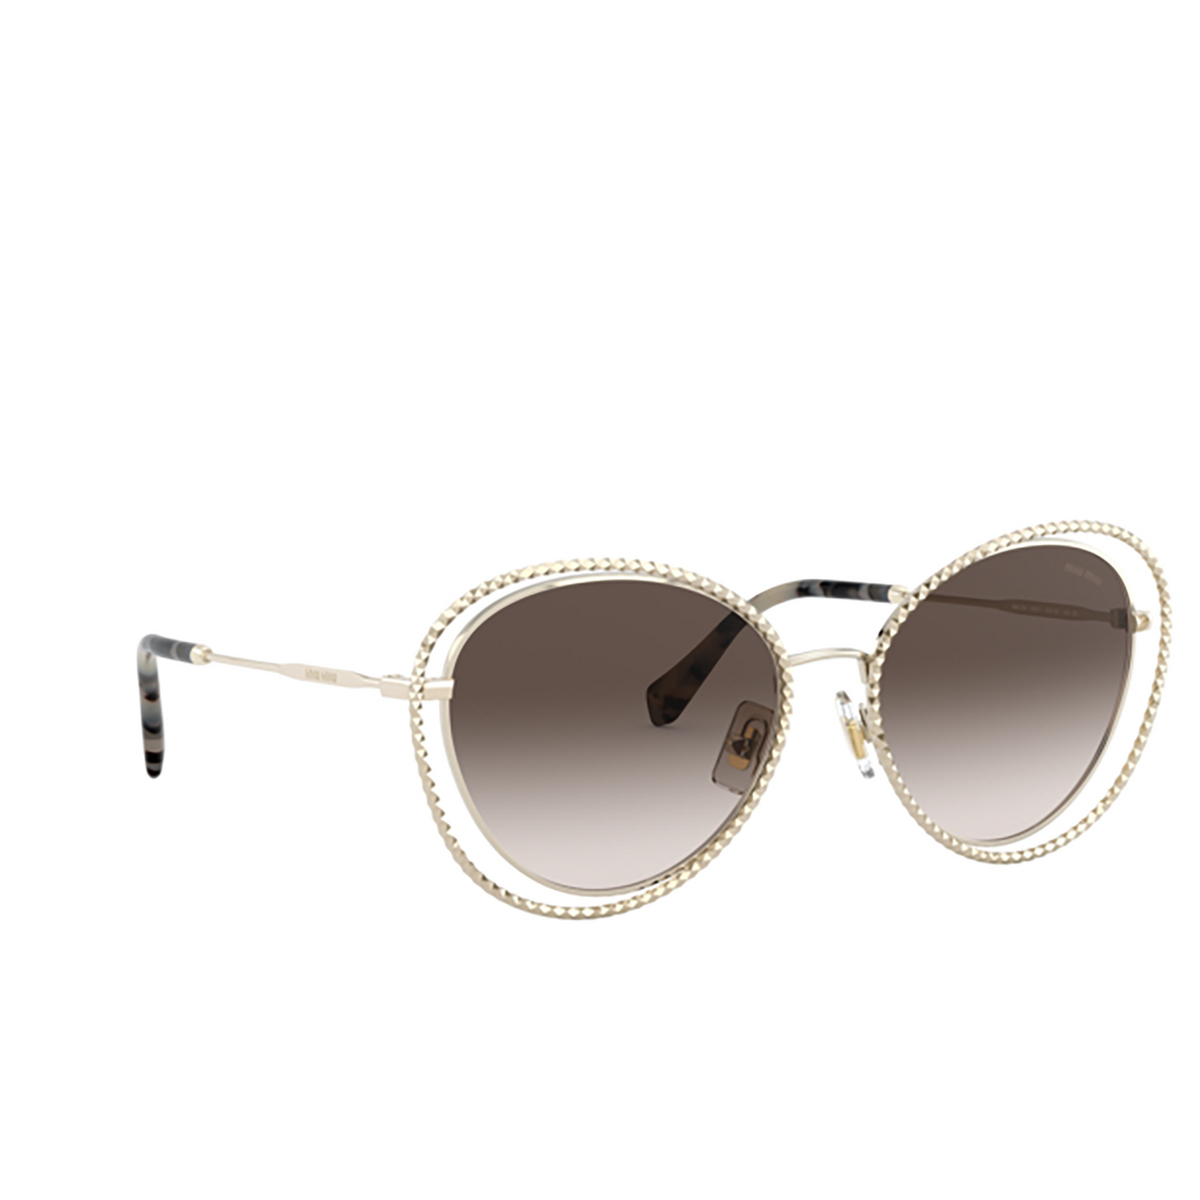 Miu Miu® Butterfly Sunglasses: Special Project MU 59VS color Pale Gold ZVN6S1 - three-quarters view.